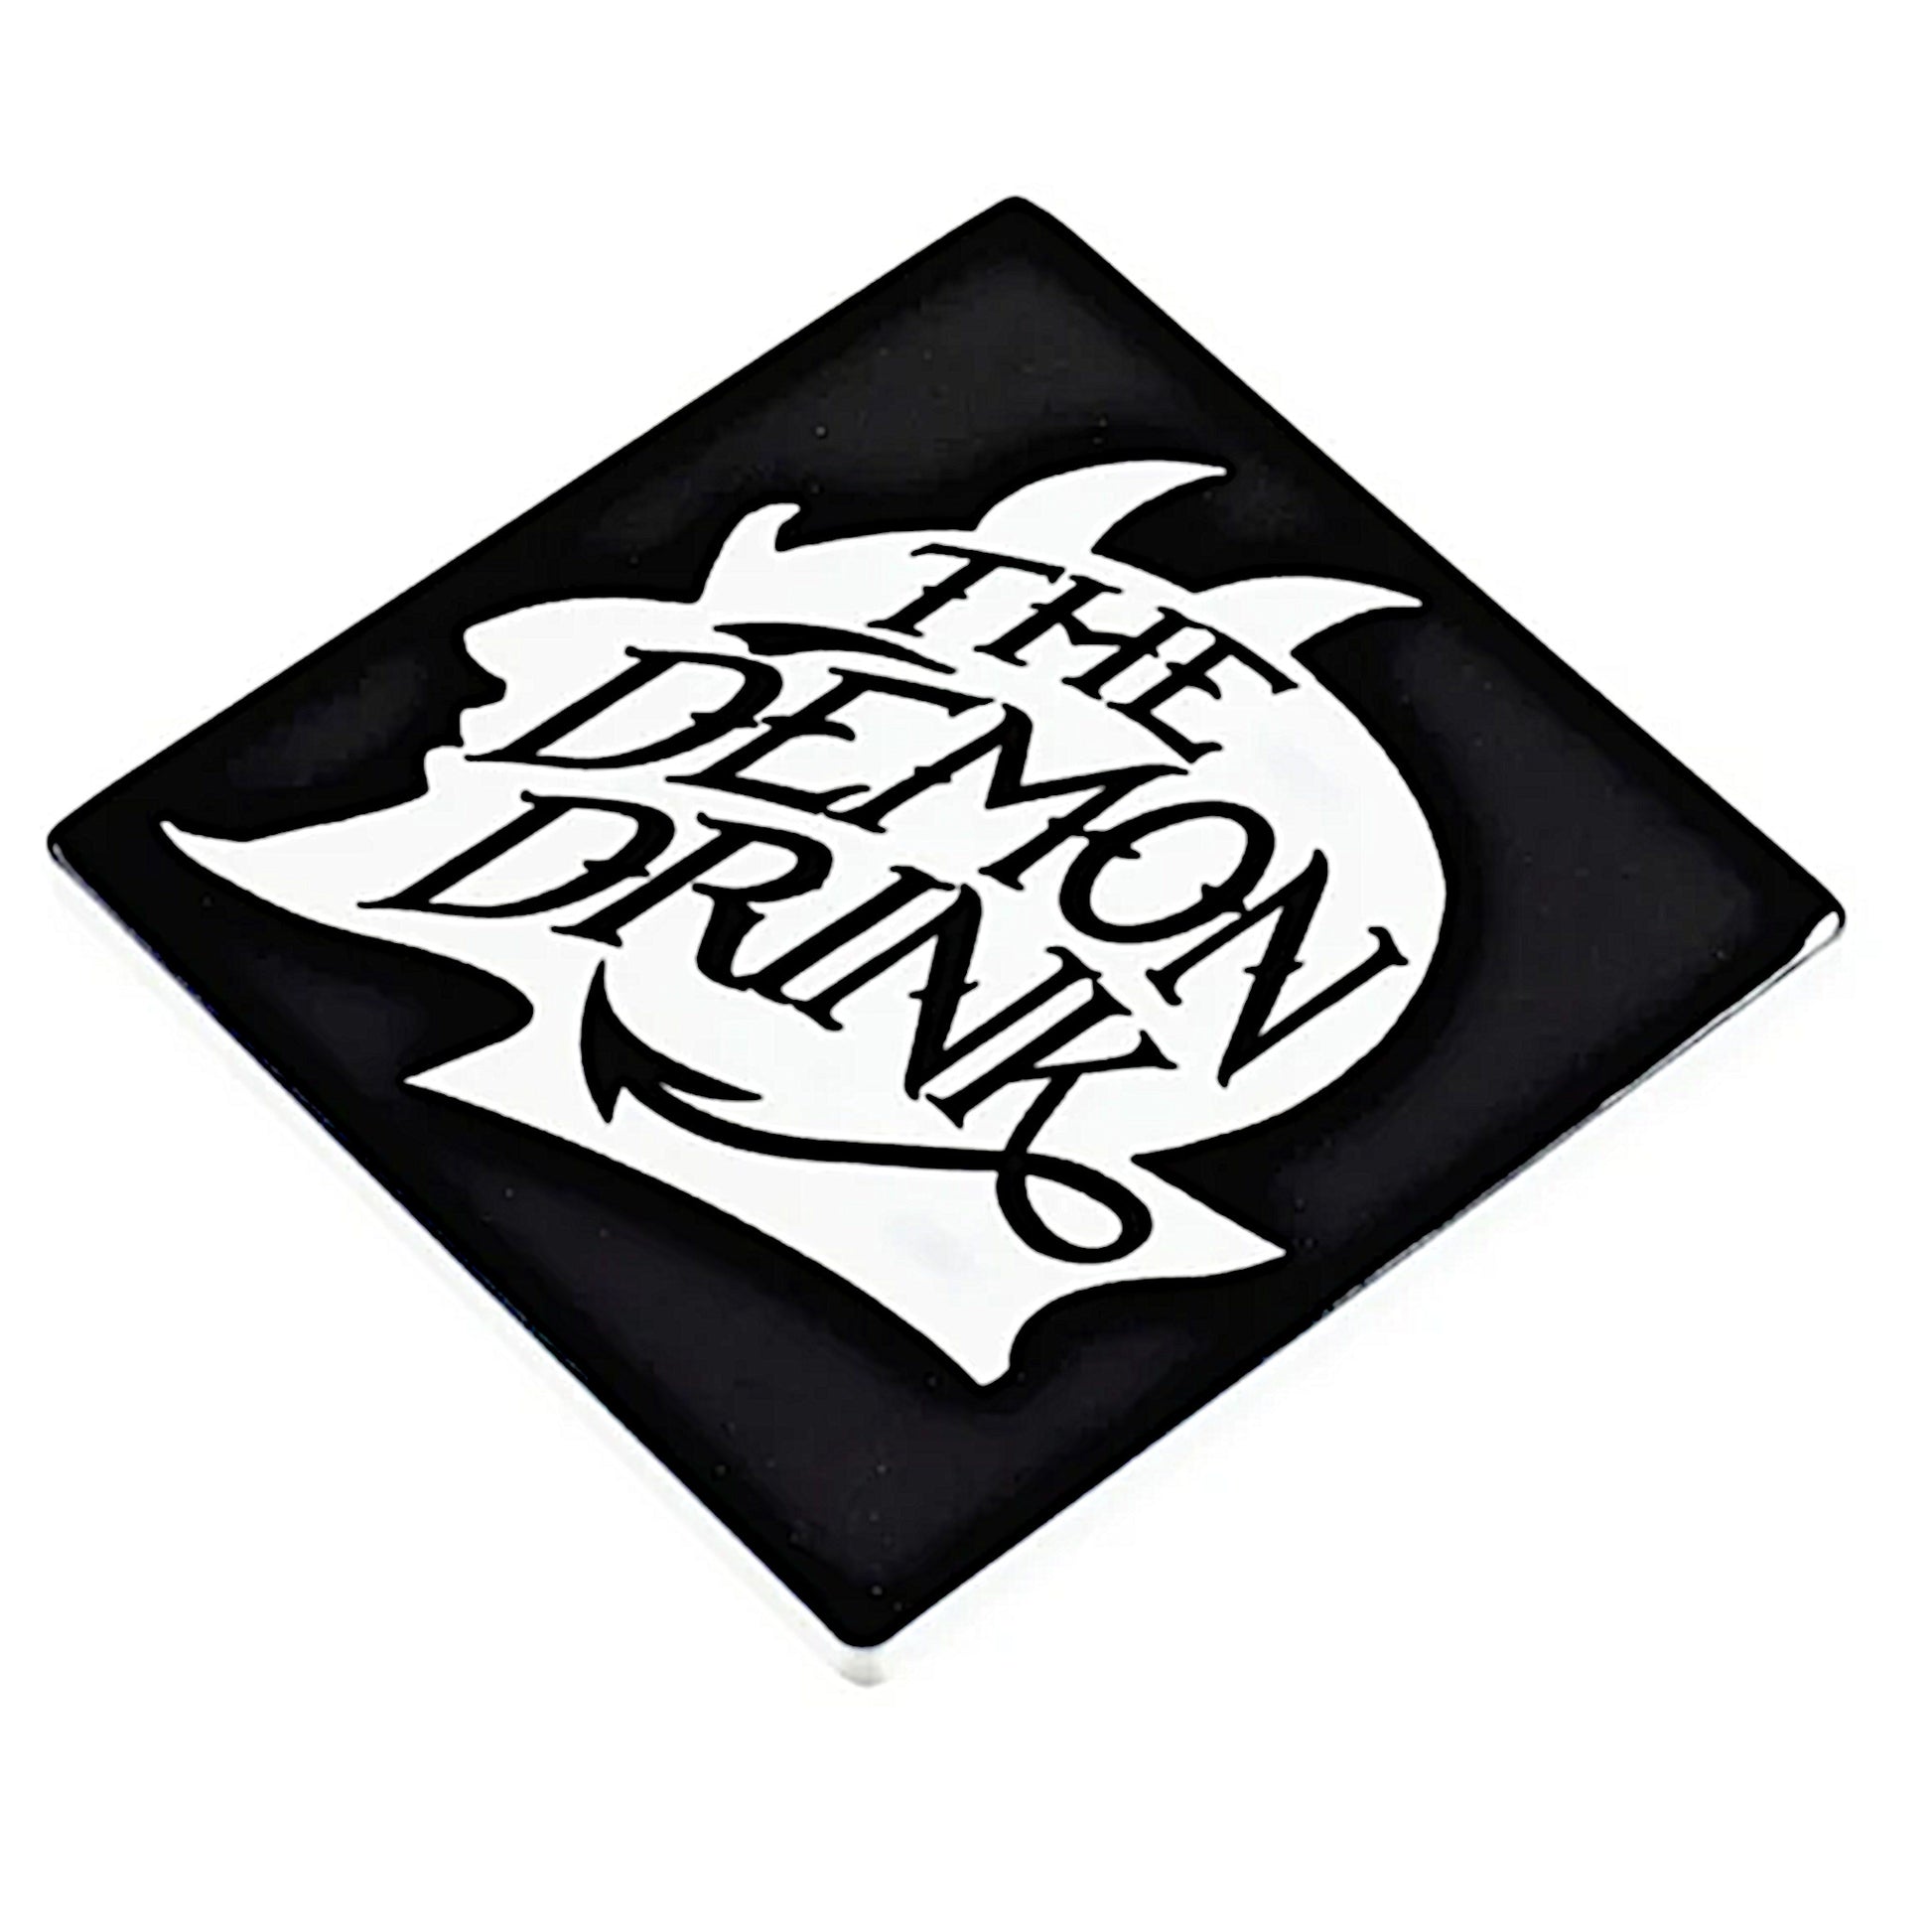 The Demon Drink Coaster | Black & White Ceramic w/ Gloss Finish - Alchemy Gothic - Coasters